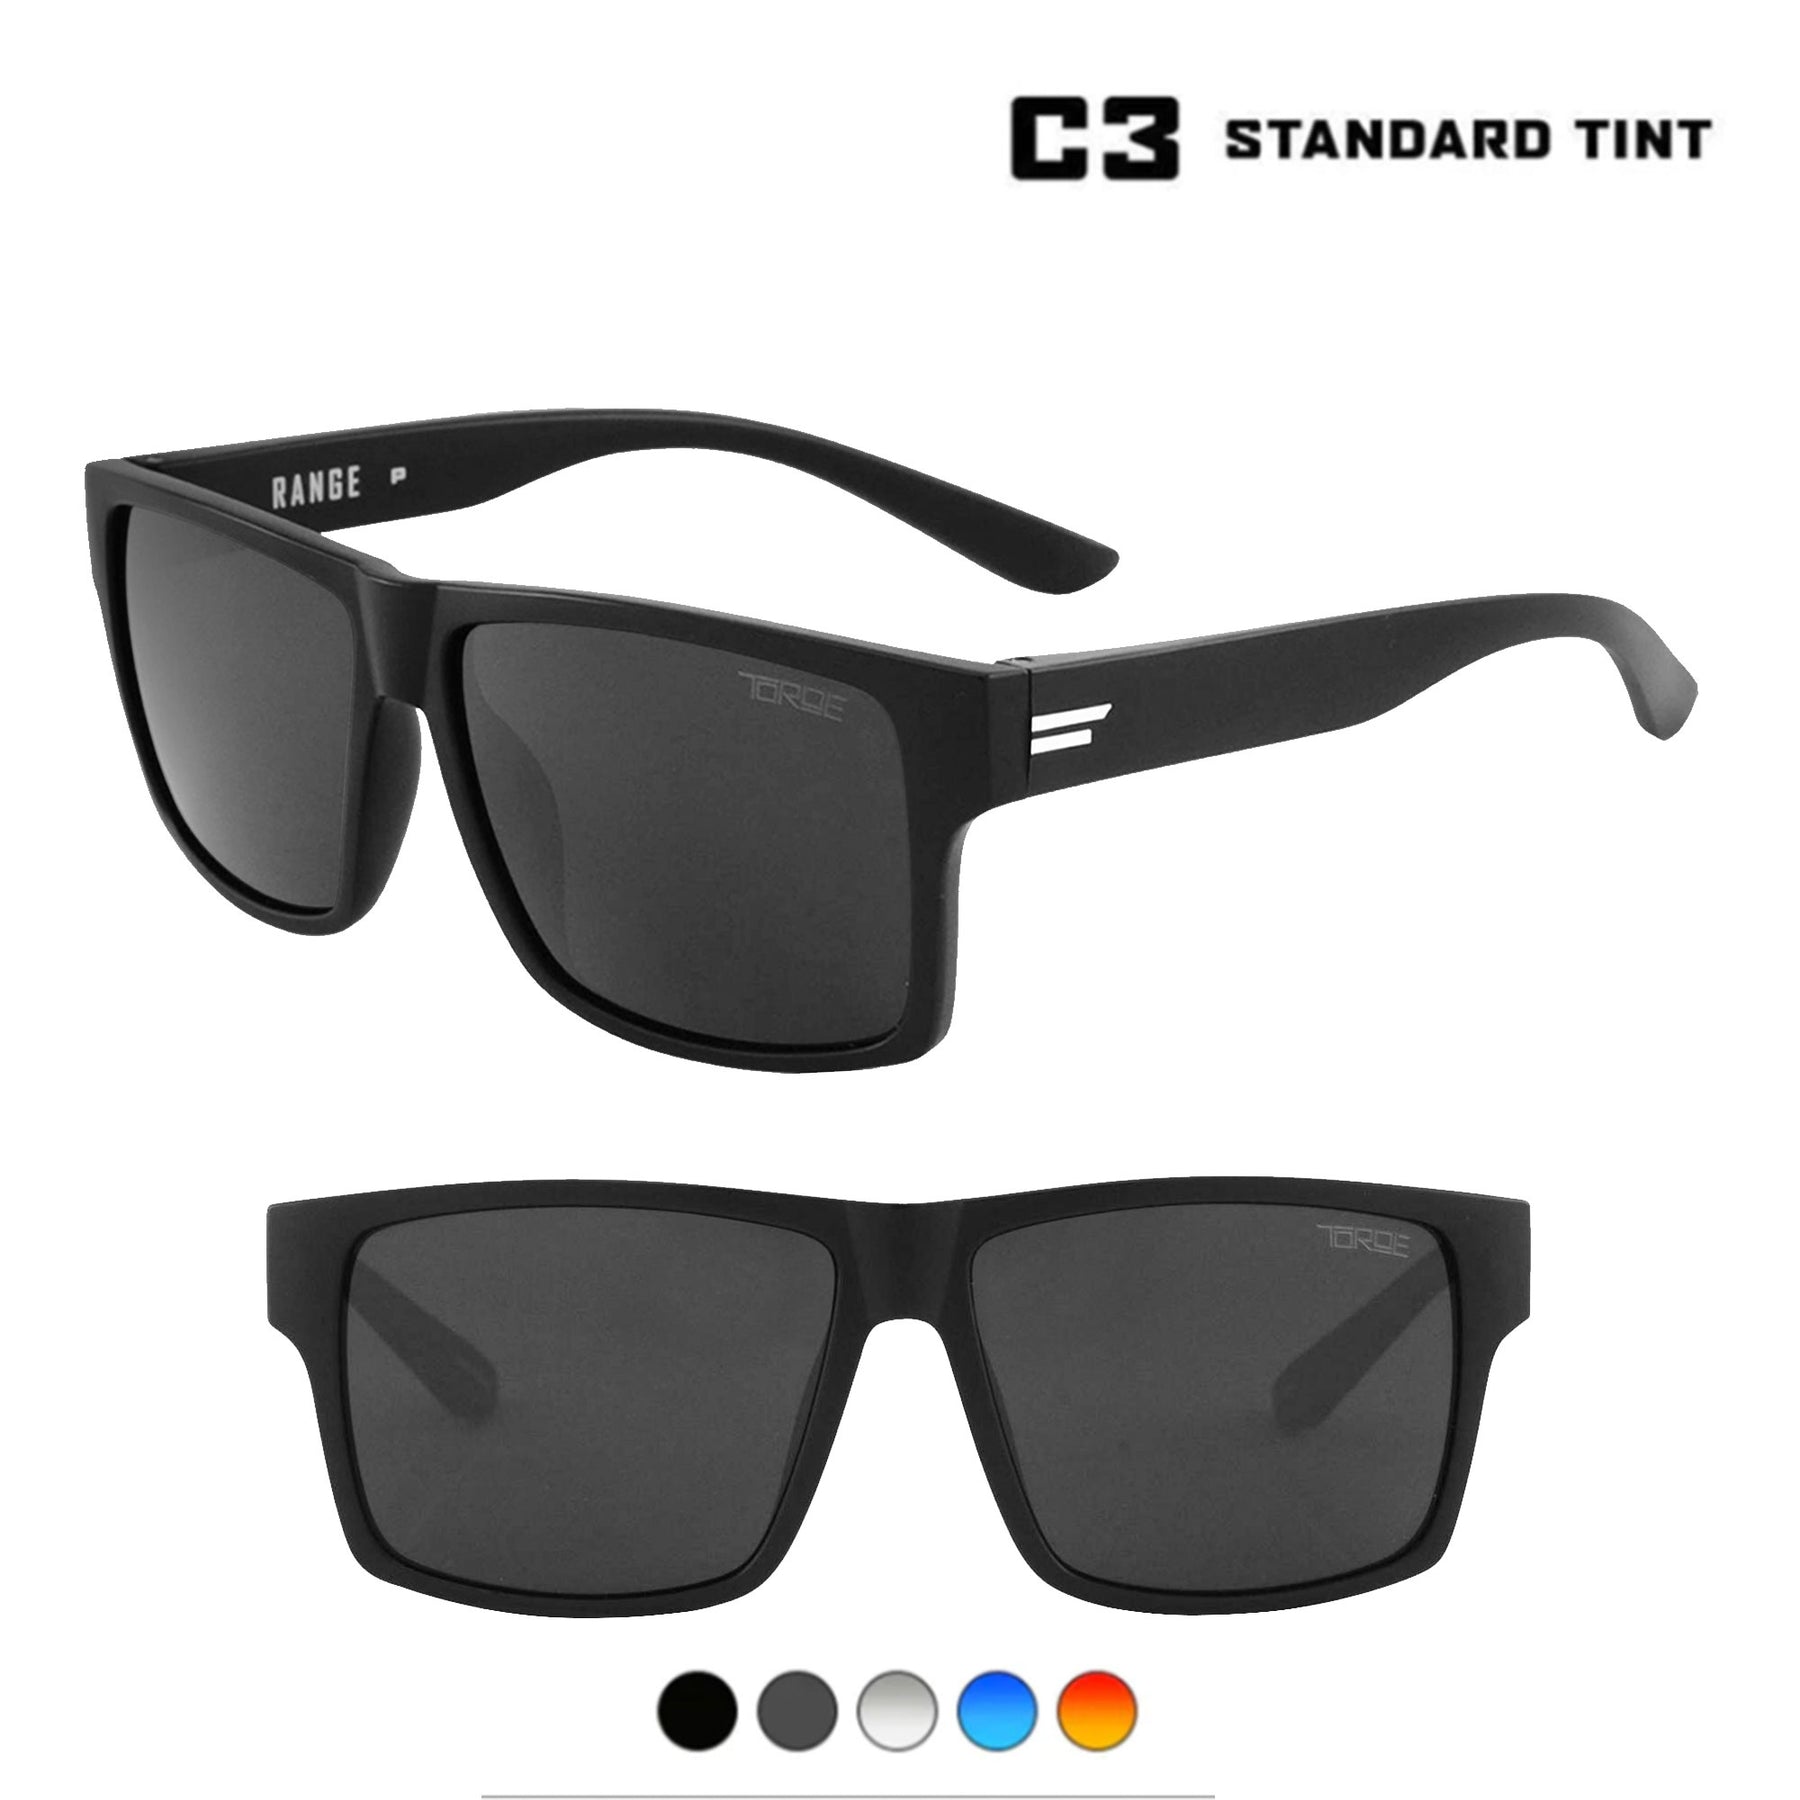 – Polarized TOROE \'Range\' with Lifetime TOROE Sunglasses Performance Eyewear Warranty